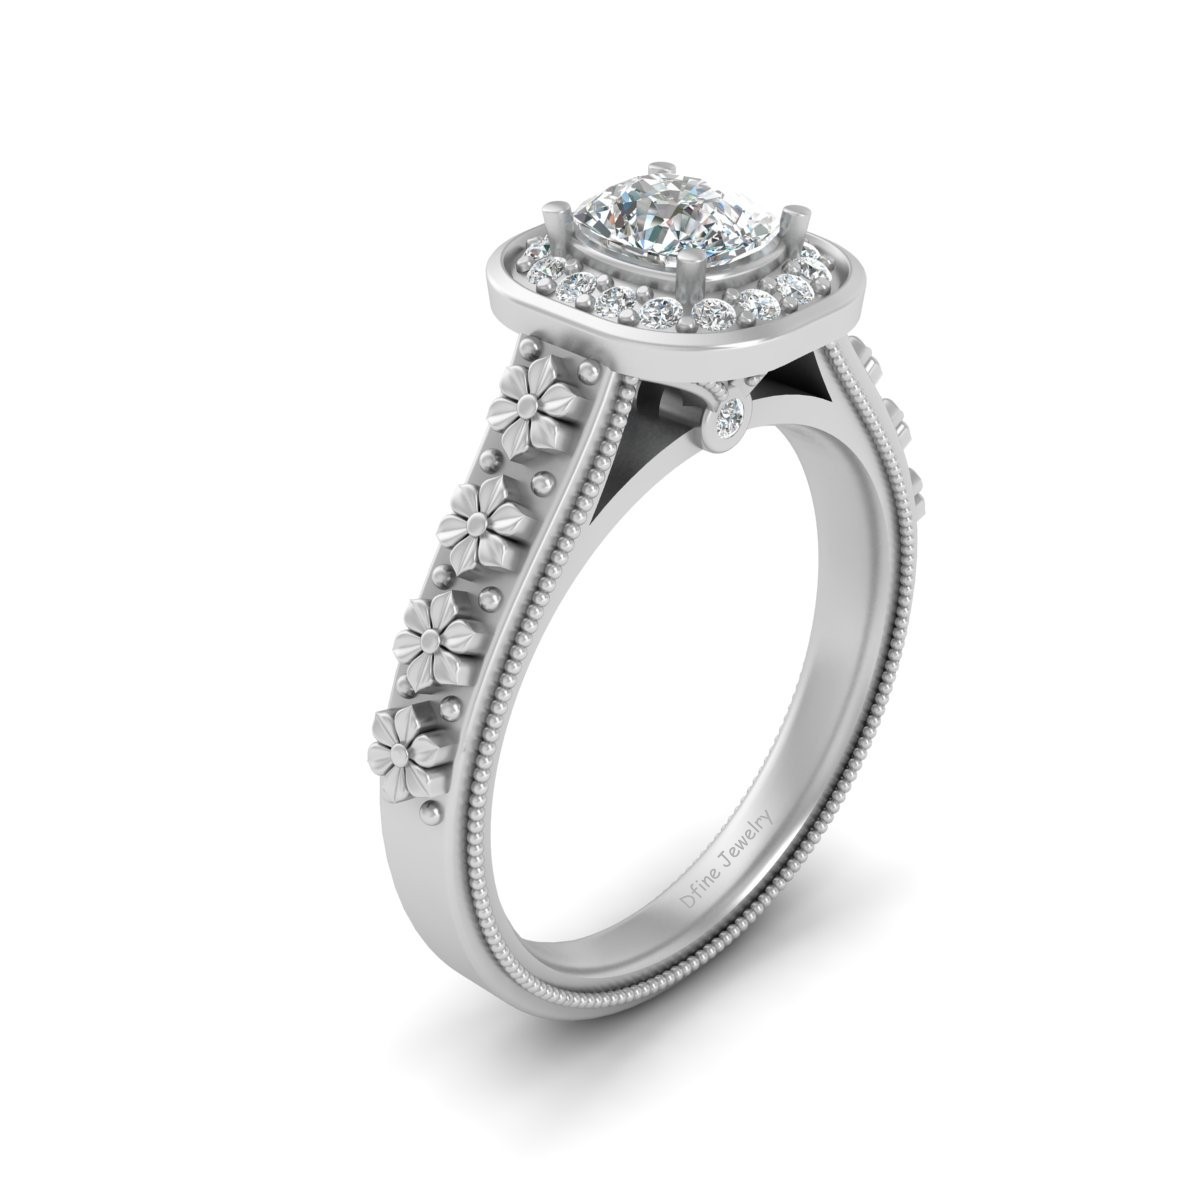 Dfj - Art nouveau floral wedding ring womens cushion cut diamond halo engagement ring